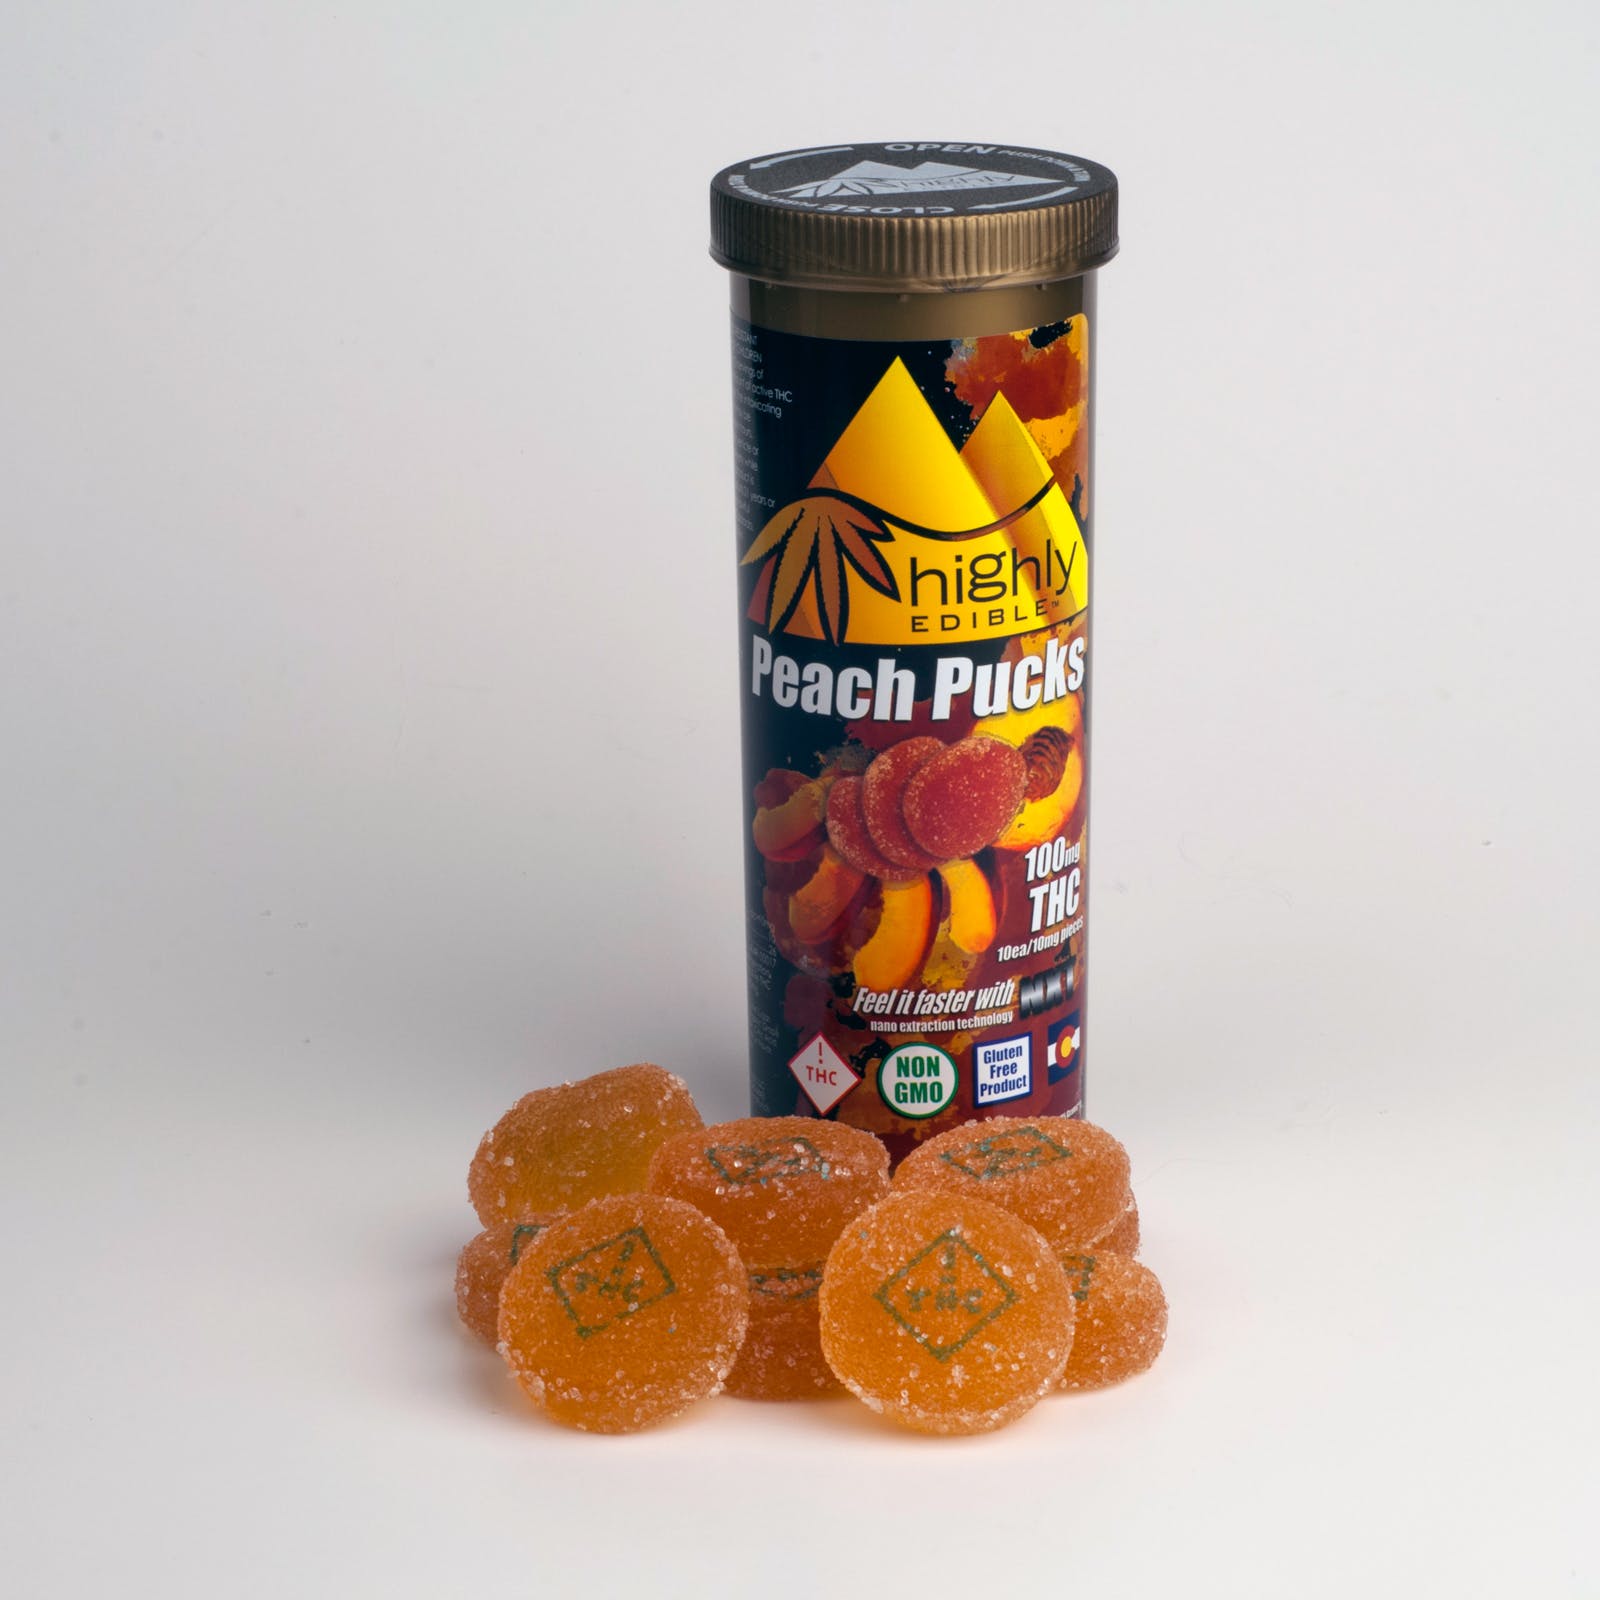 Highly Edible Gummies 250mg- Peach Pucks (Tax Included)